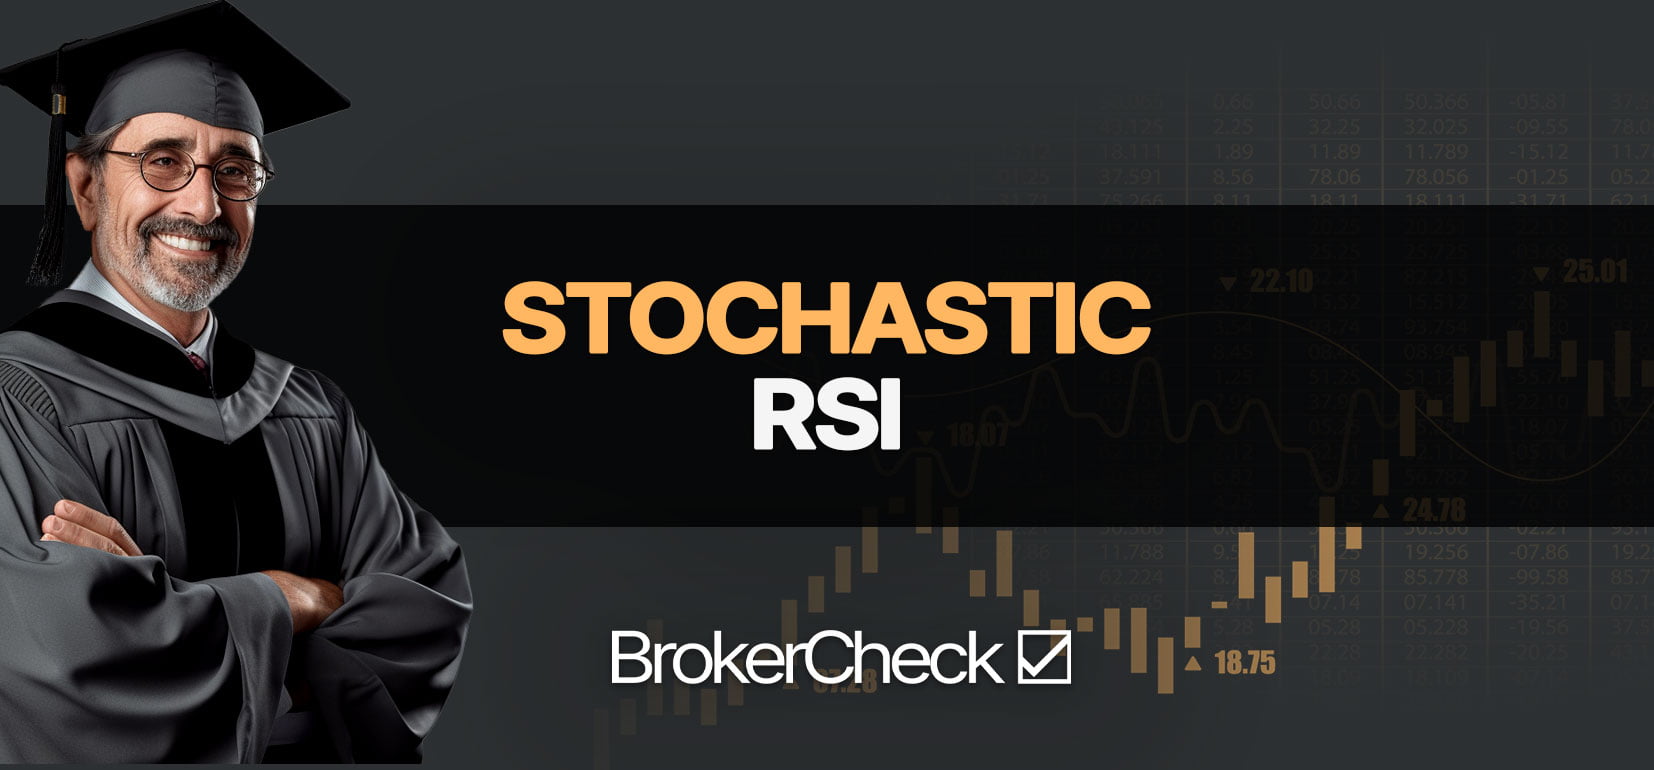 Stochastic RSI Indicator